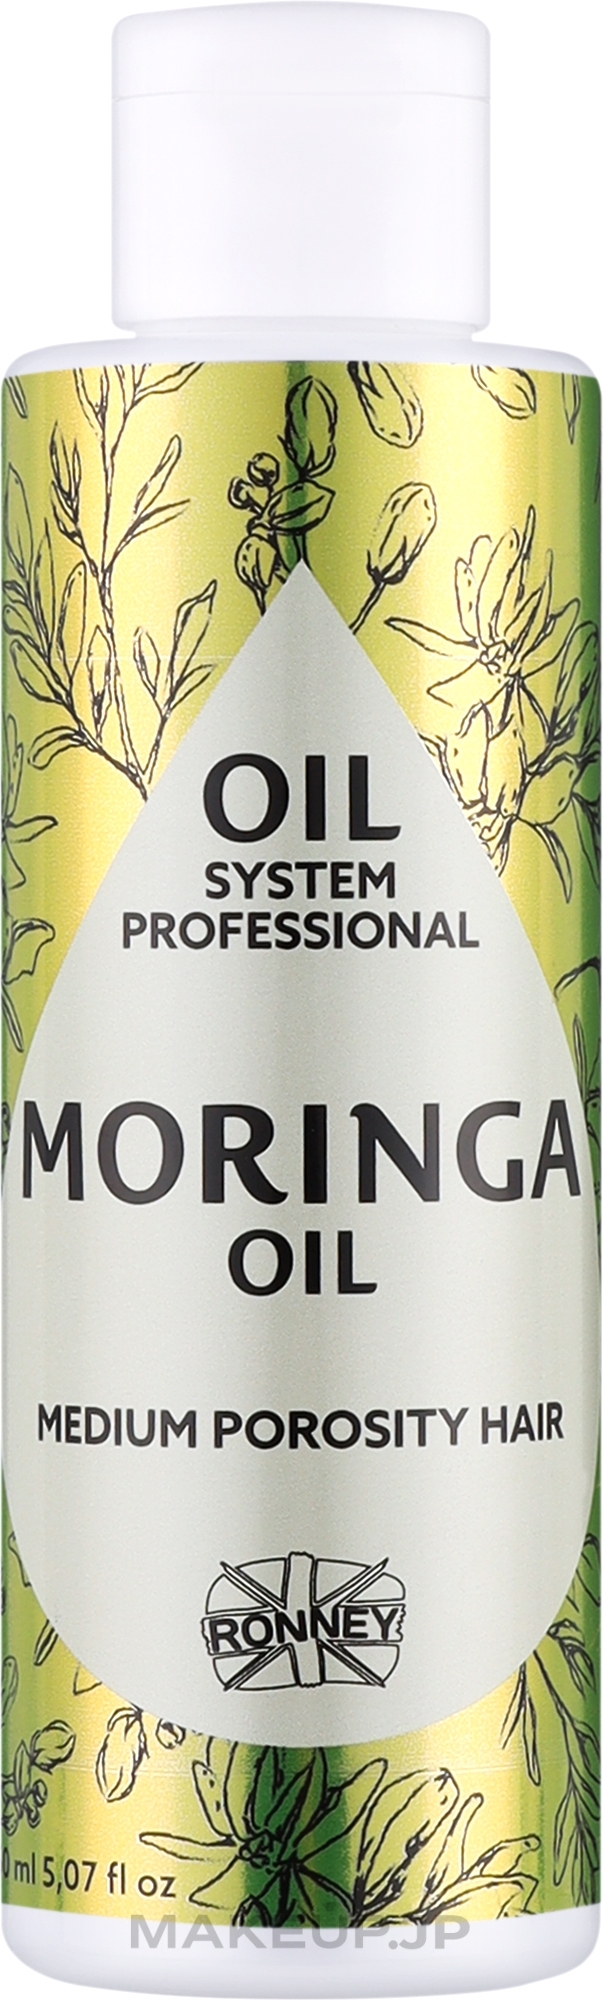 Medium Porosity Hair Oil with Moringa Oil - Ronney Professional Oil System Medium Porosity Hair Moringa Oil	 — photo 150 ml